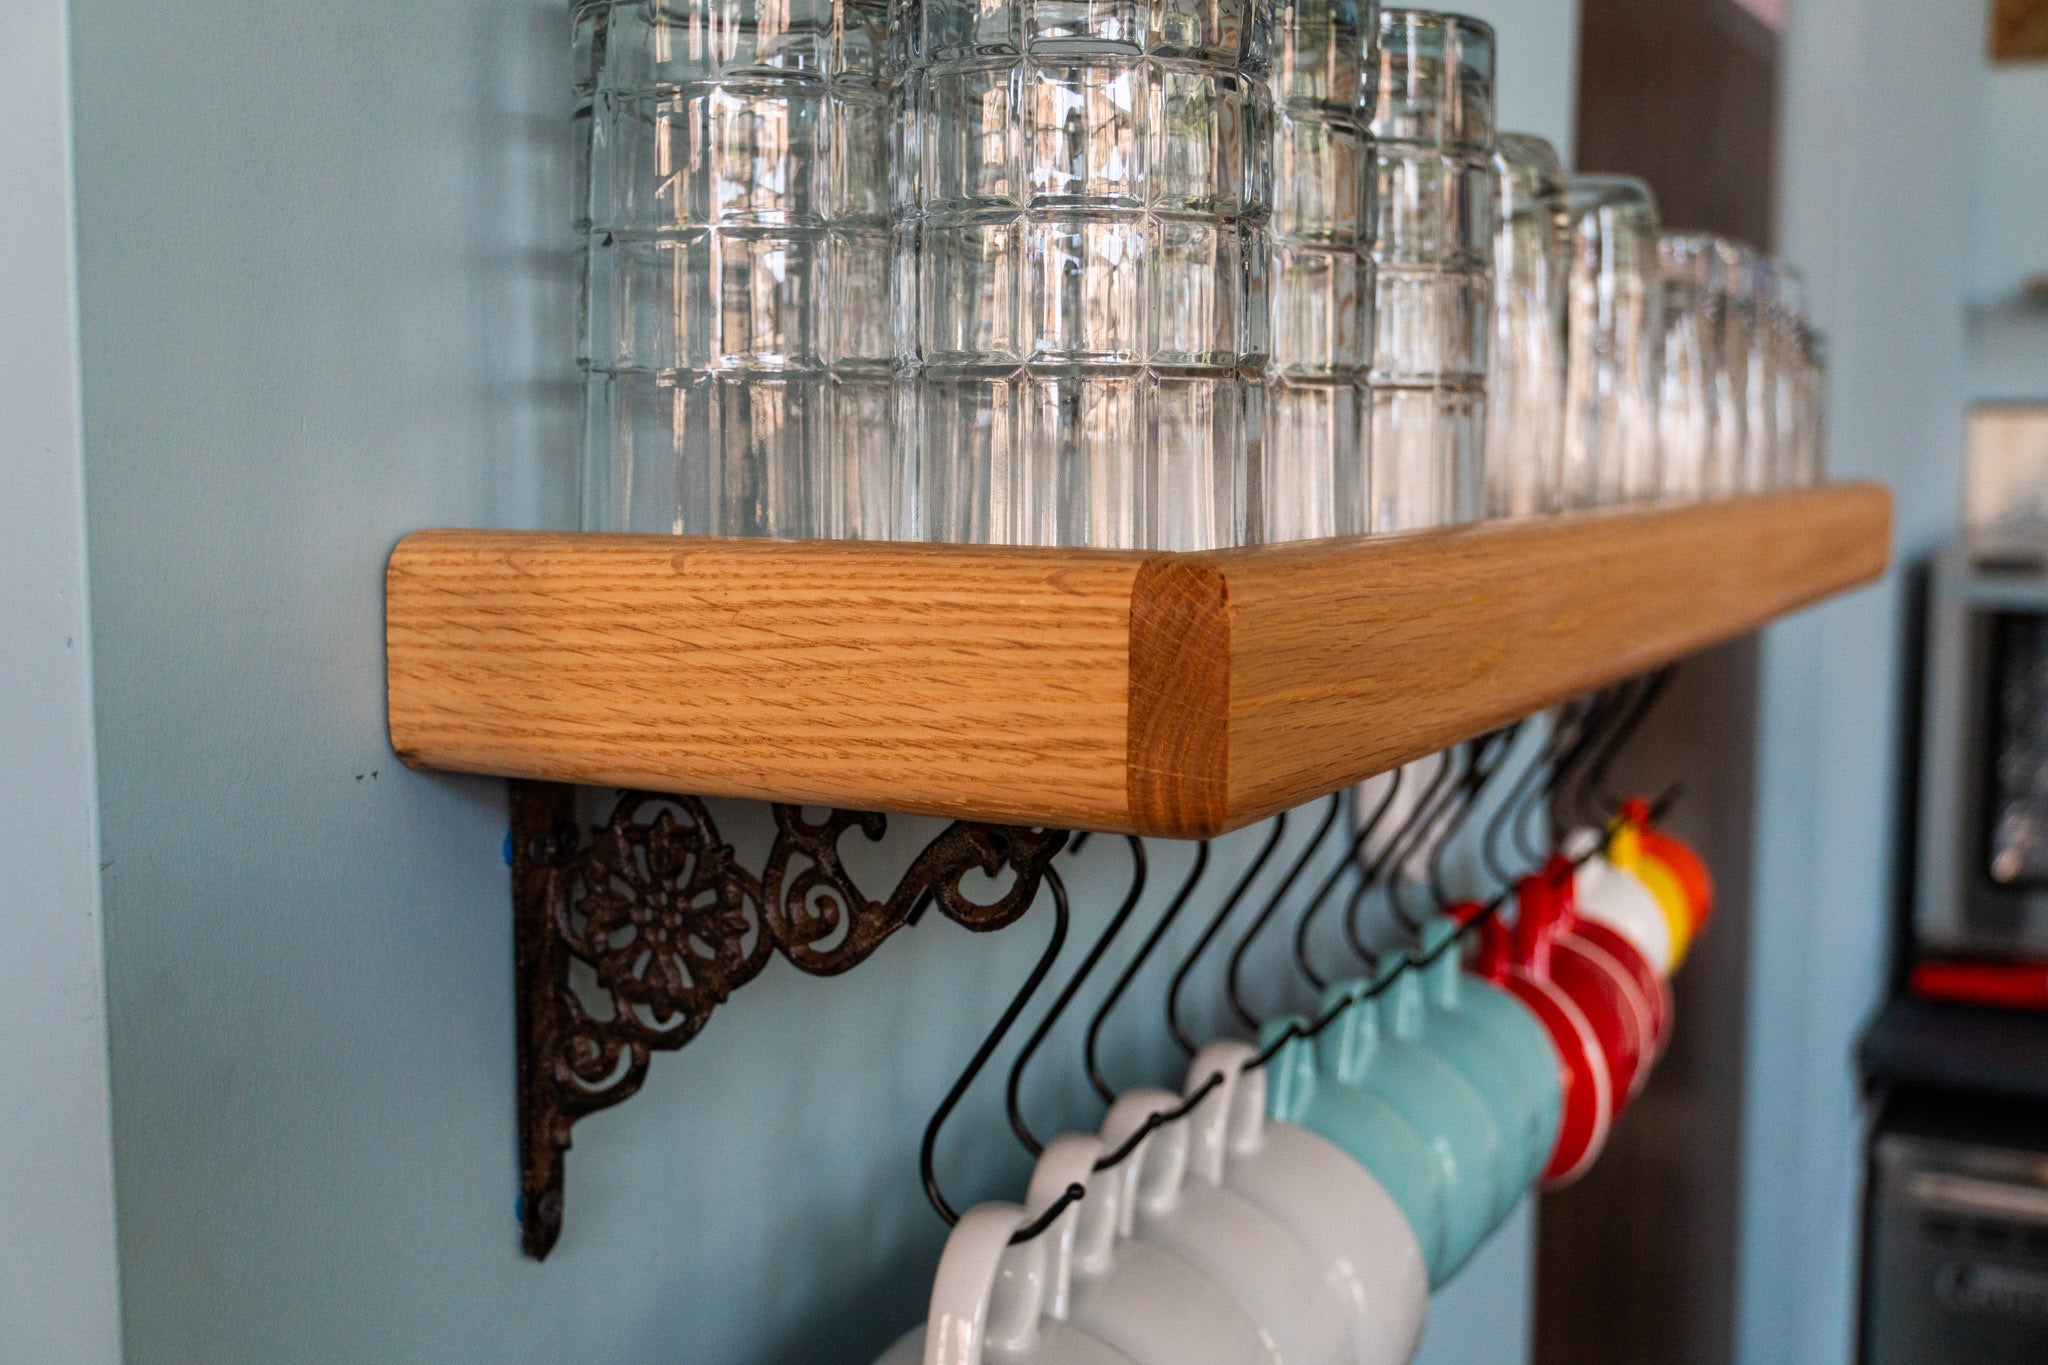 Stylish & Durable Coffee Mug Shelf for Glasses, Cups - NookWoodworking